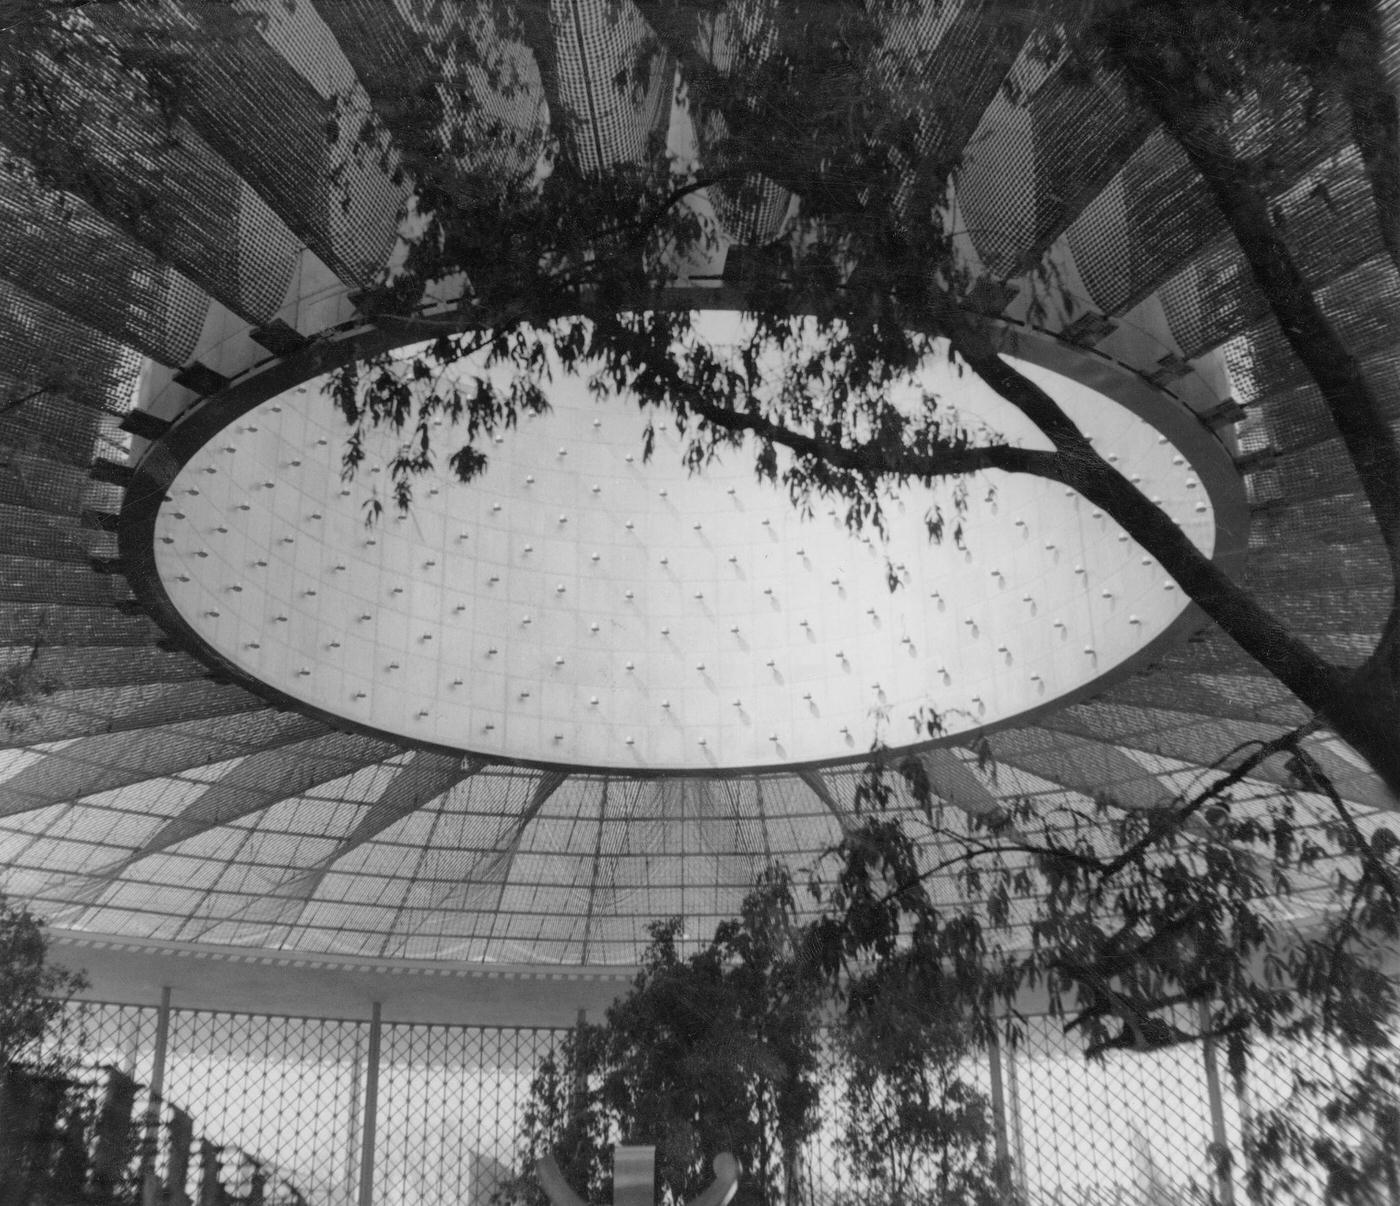 American Pavilion, Architect Edward Durell Stone, the dome